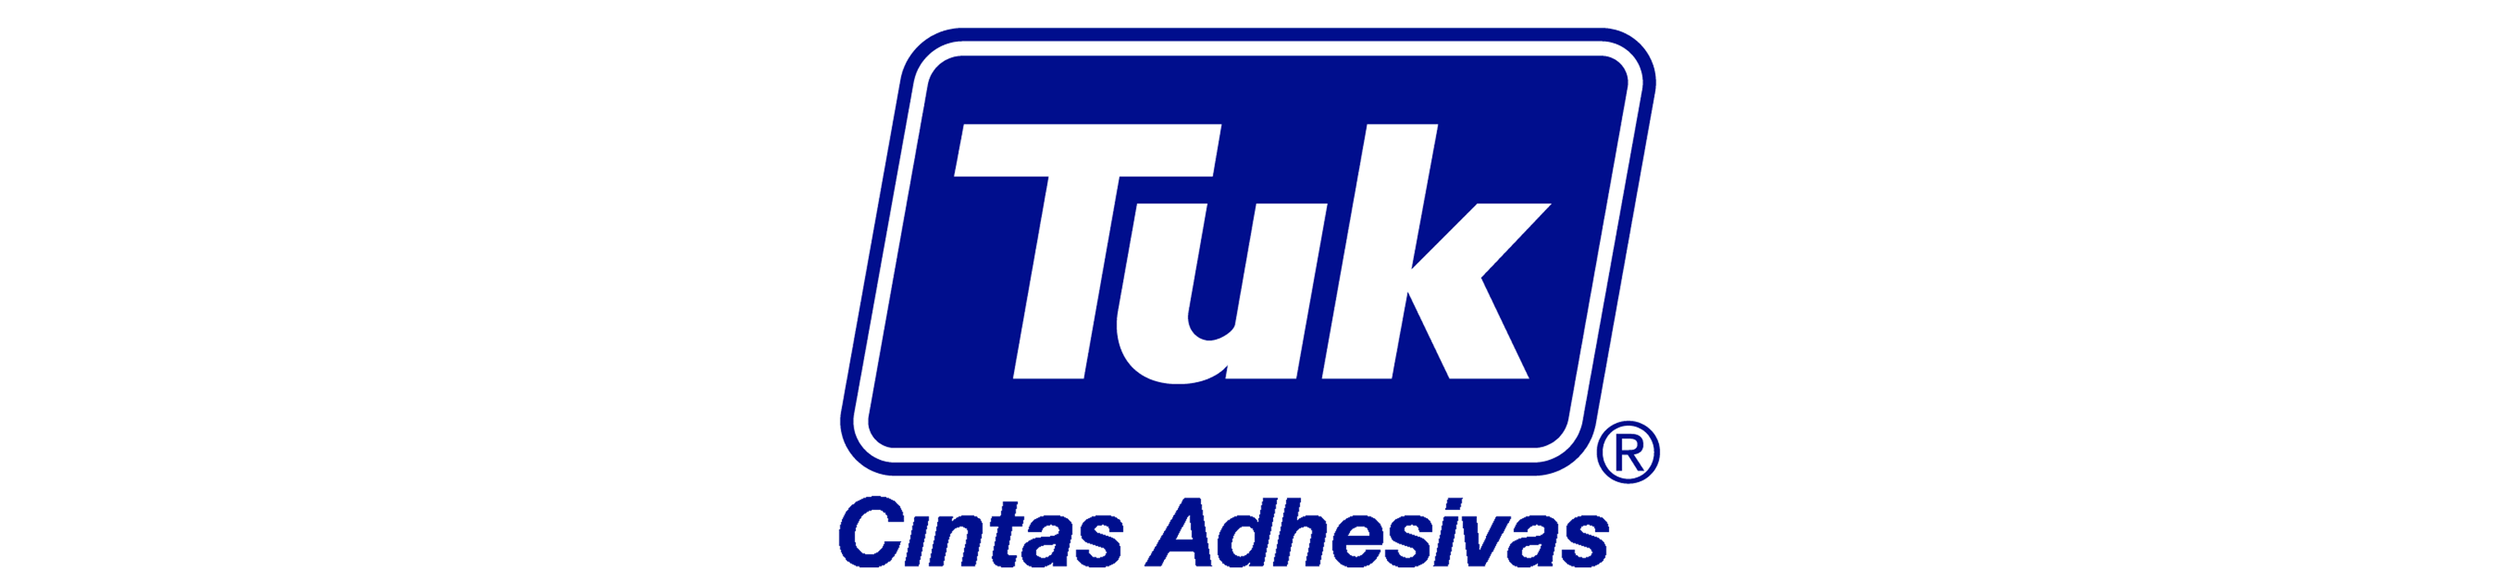 tuk_logo_nuevo.png